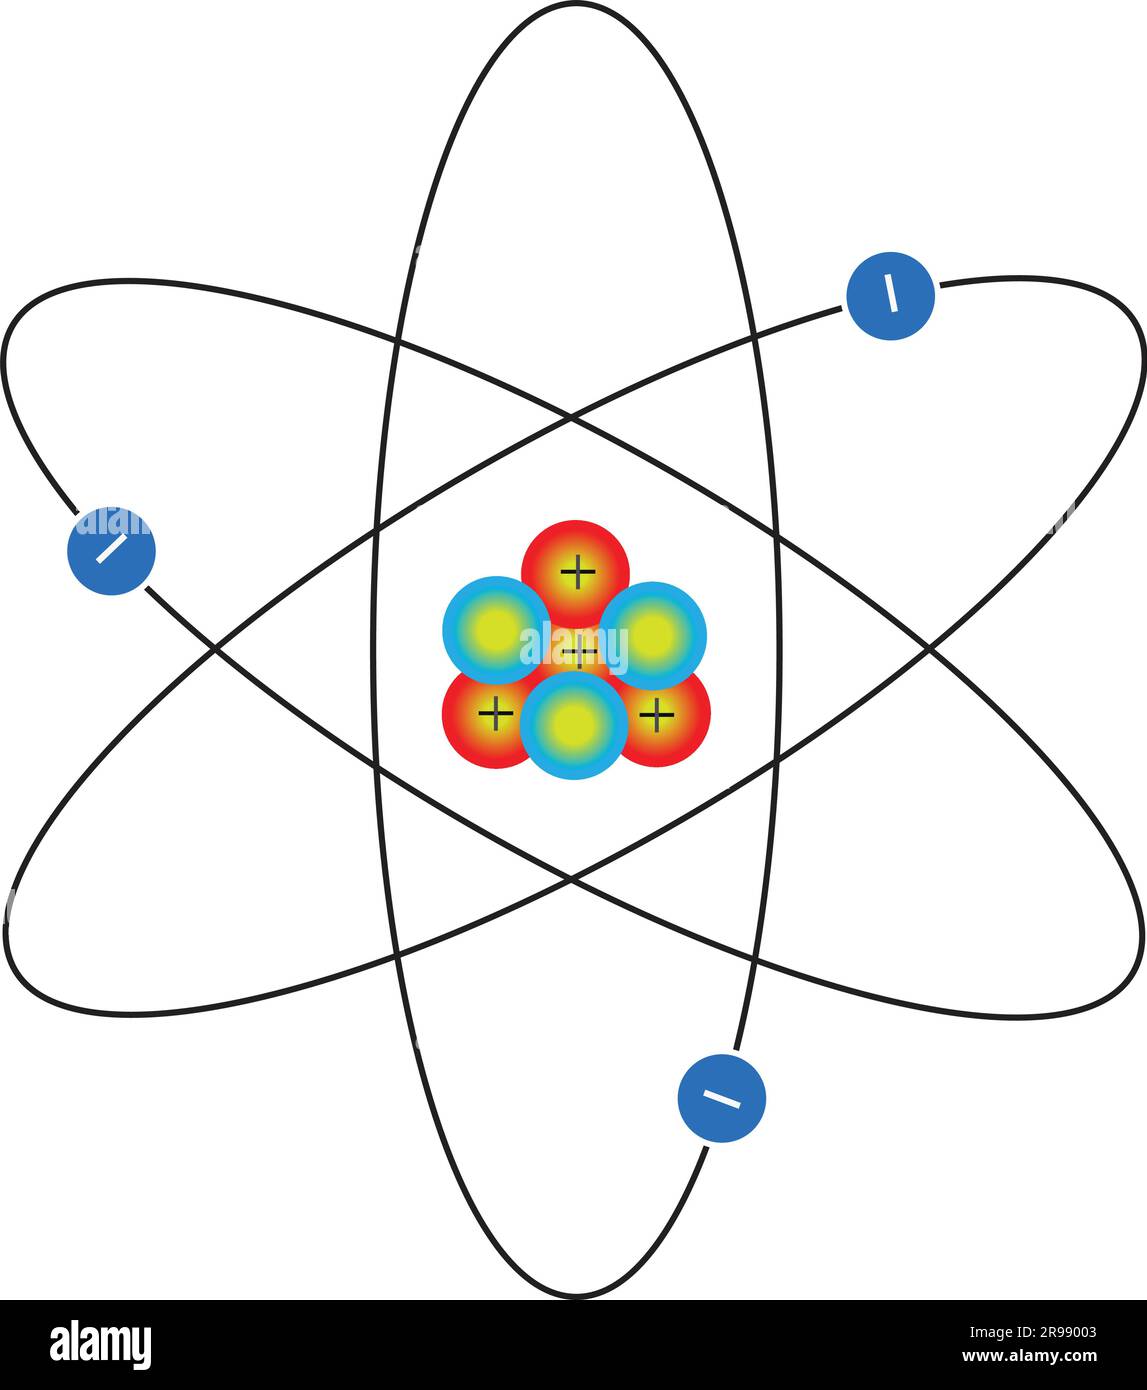 Atomvektor mit Protonen- und Neutronenkern. Stock Vektor